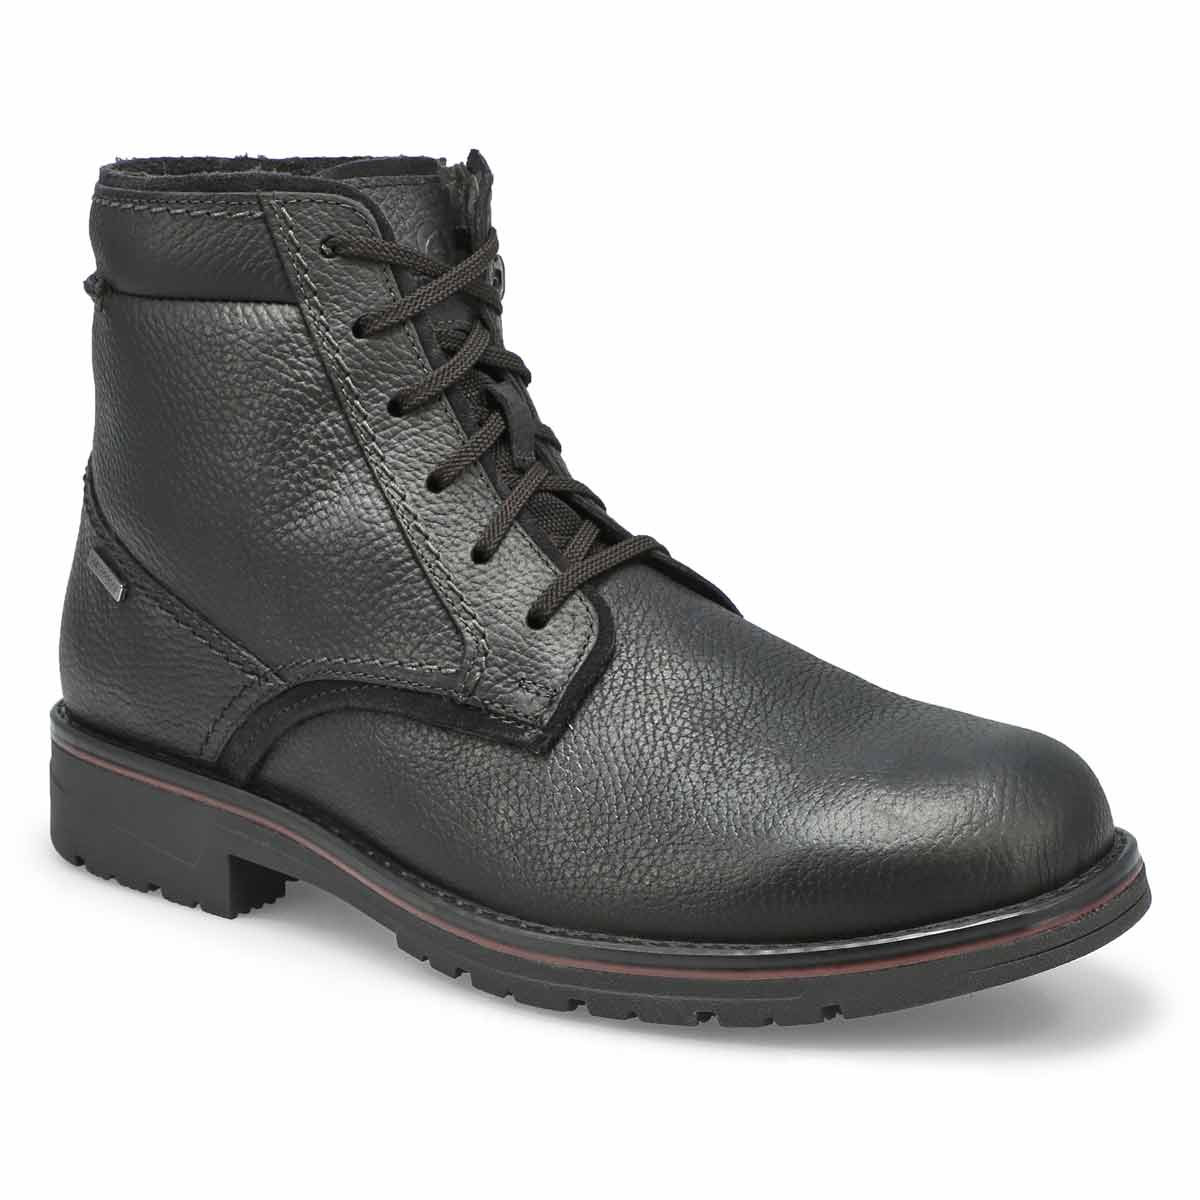 Men's Morris High Waterproof Wide Boot - Black